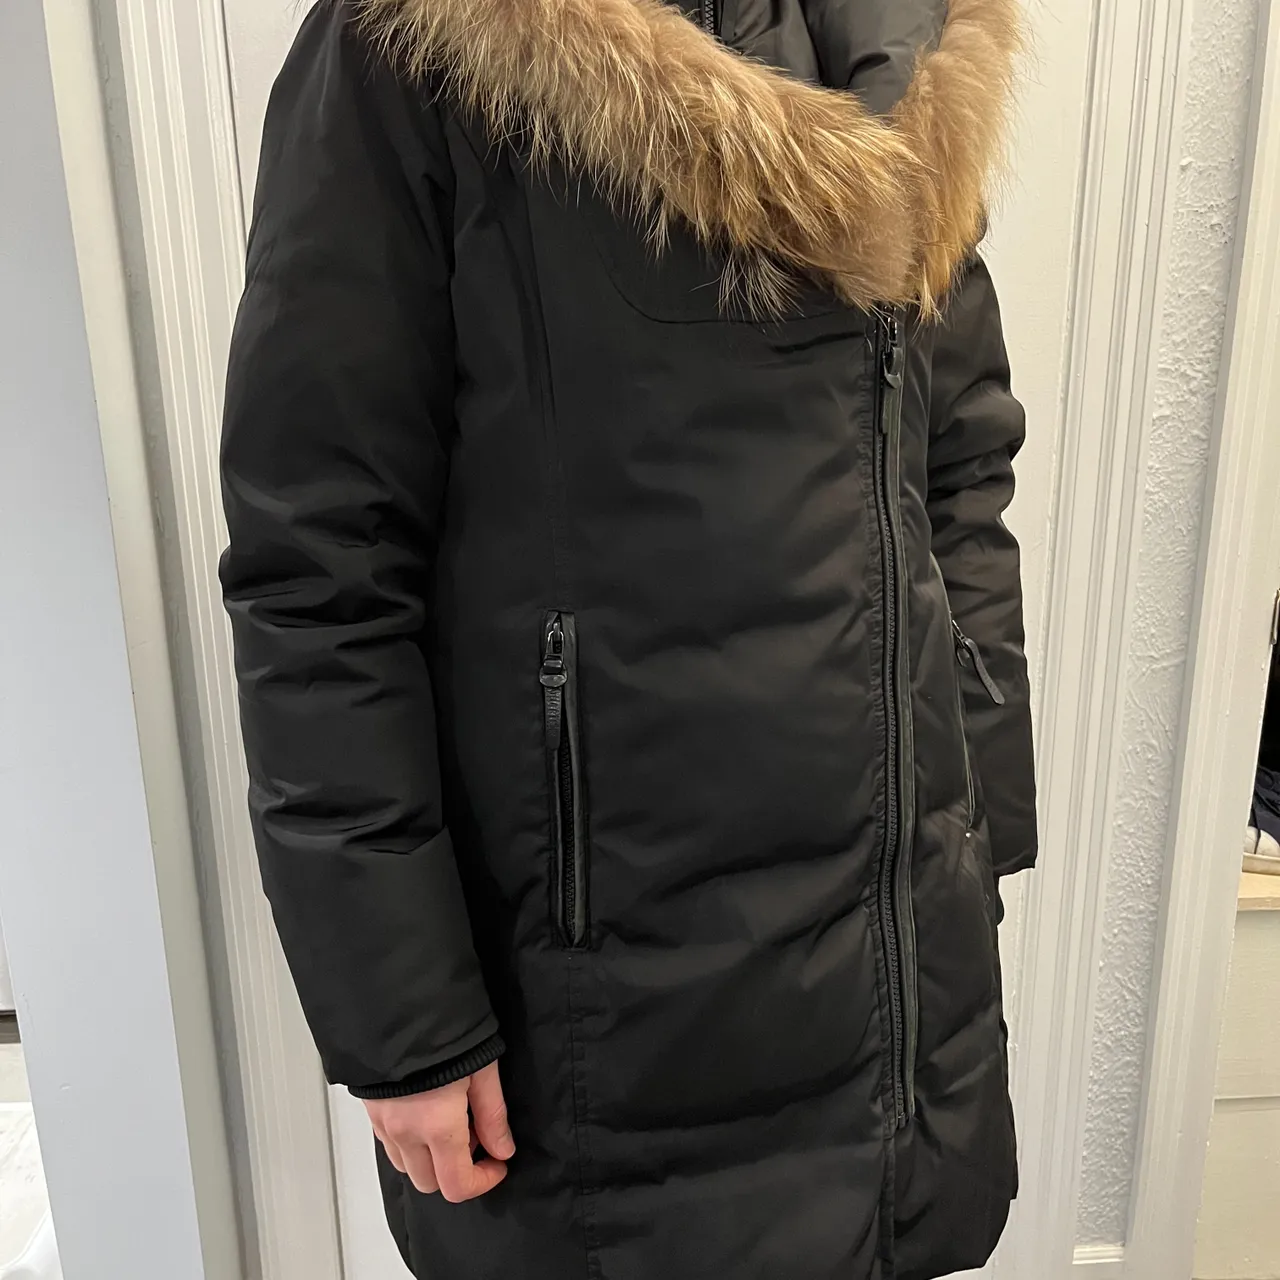 Warm winter coat size L photo 1